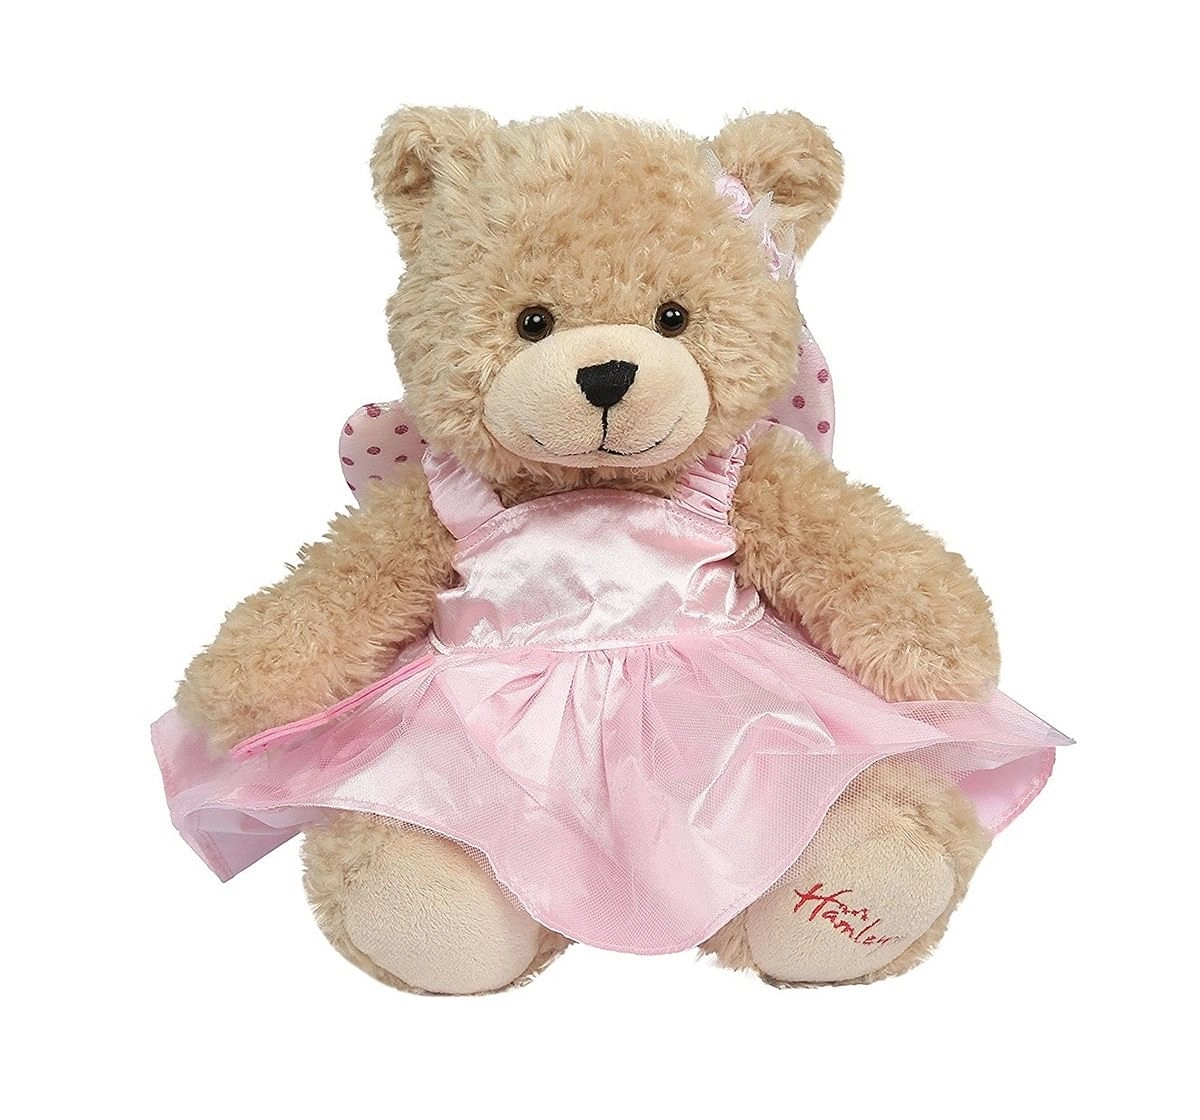  Hamleys Fairy Bear Soft Toy (Brown/Pink) Teddy Bears for Kids age 3Y+ - 6 Cm 